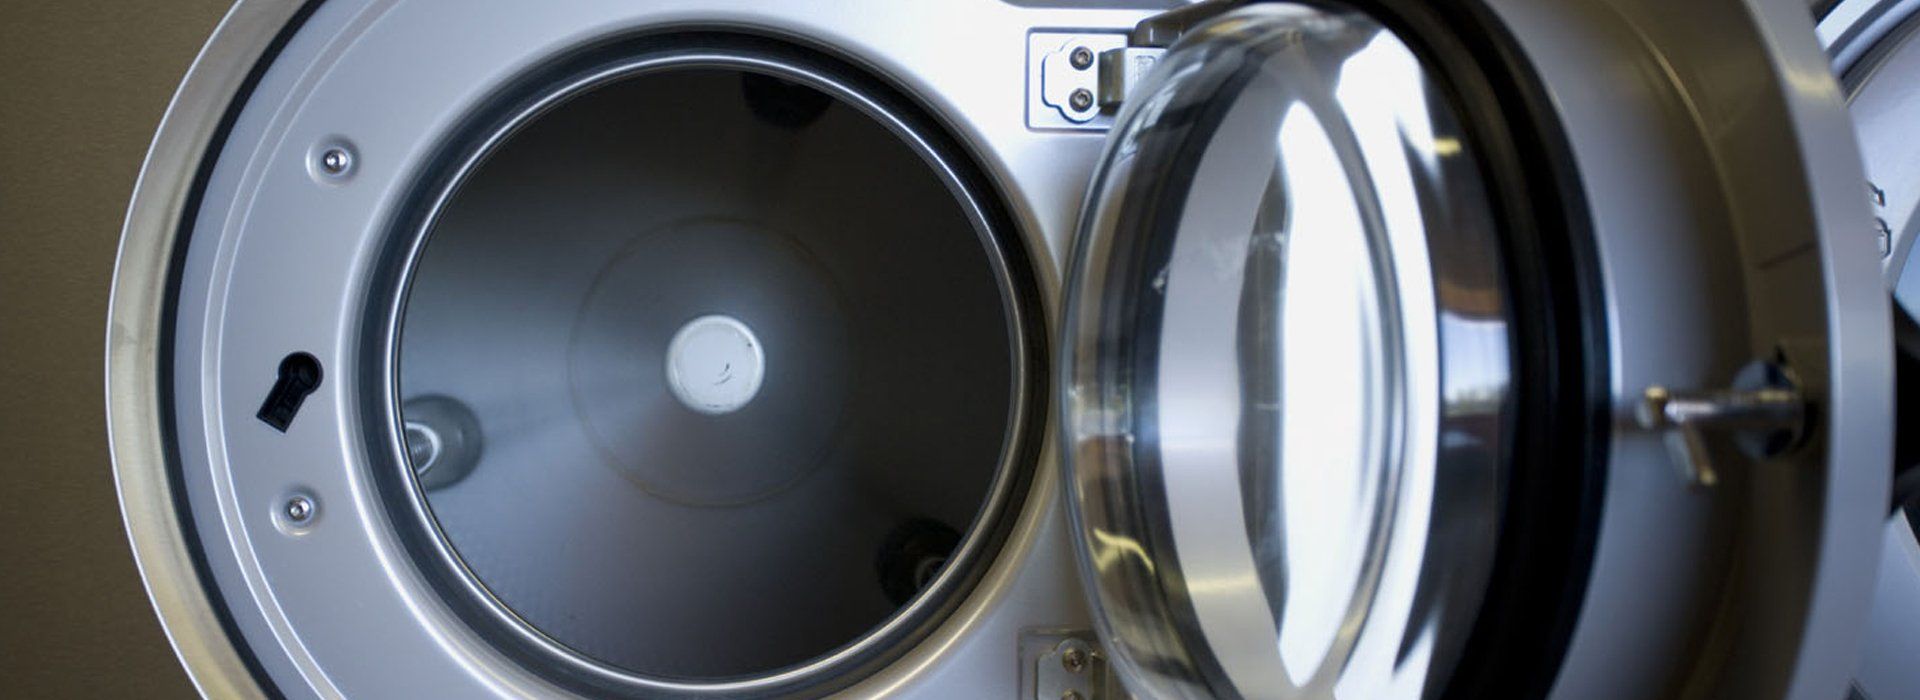 Washing machine maintenance